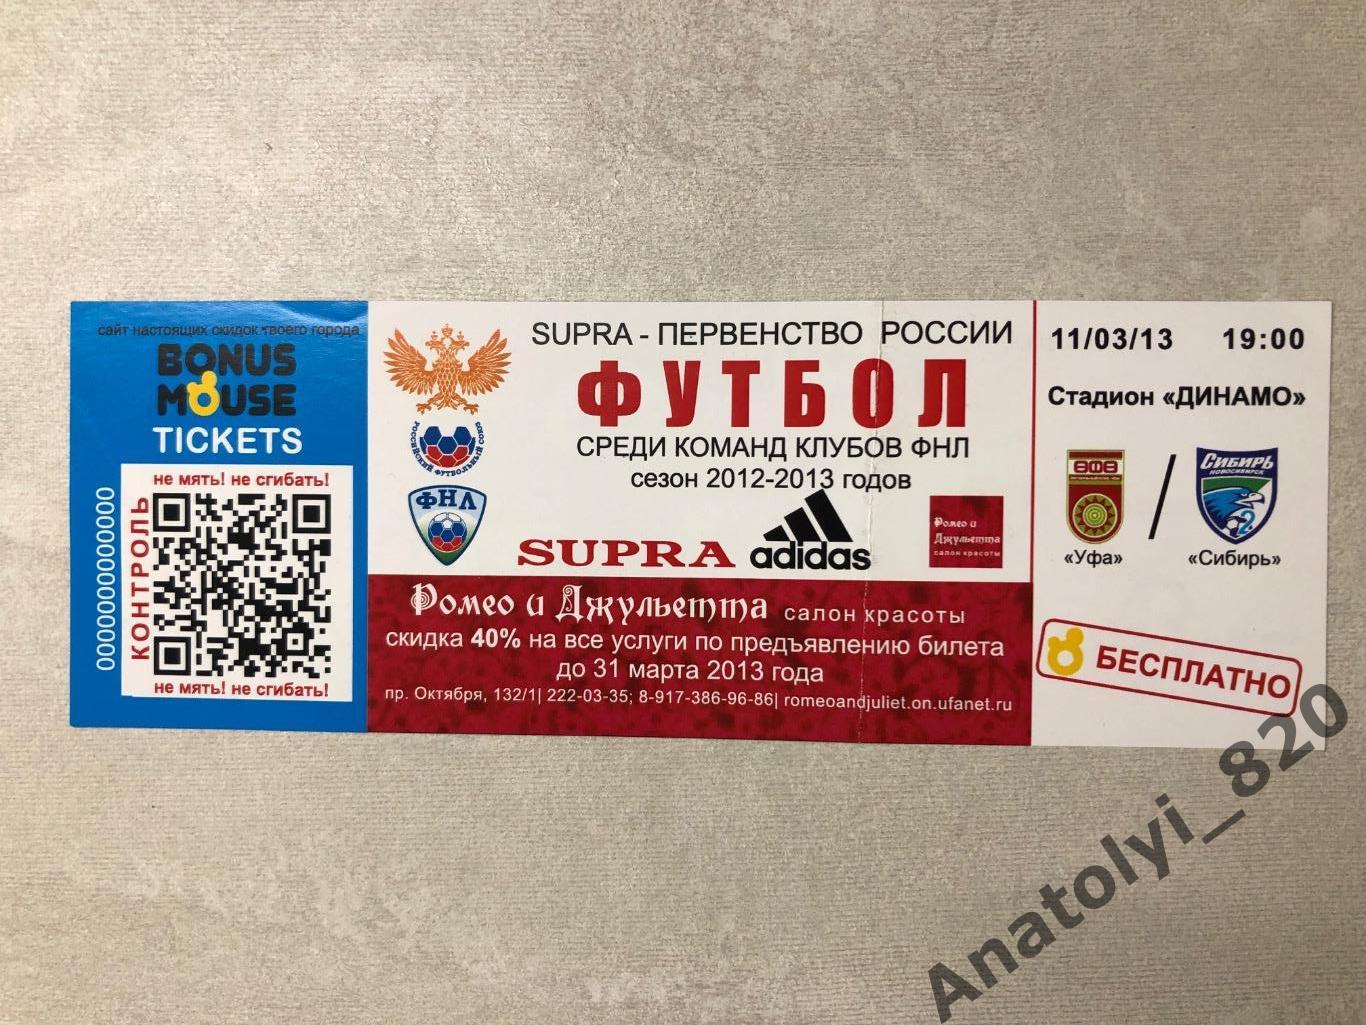 Уфа - Сибирь Новосибирск, 11.03.2013 билет